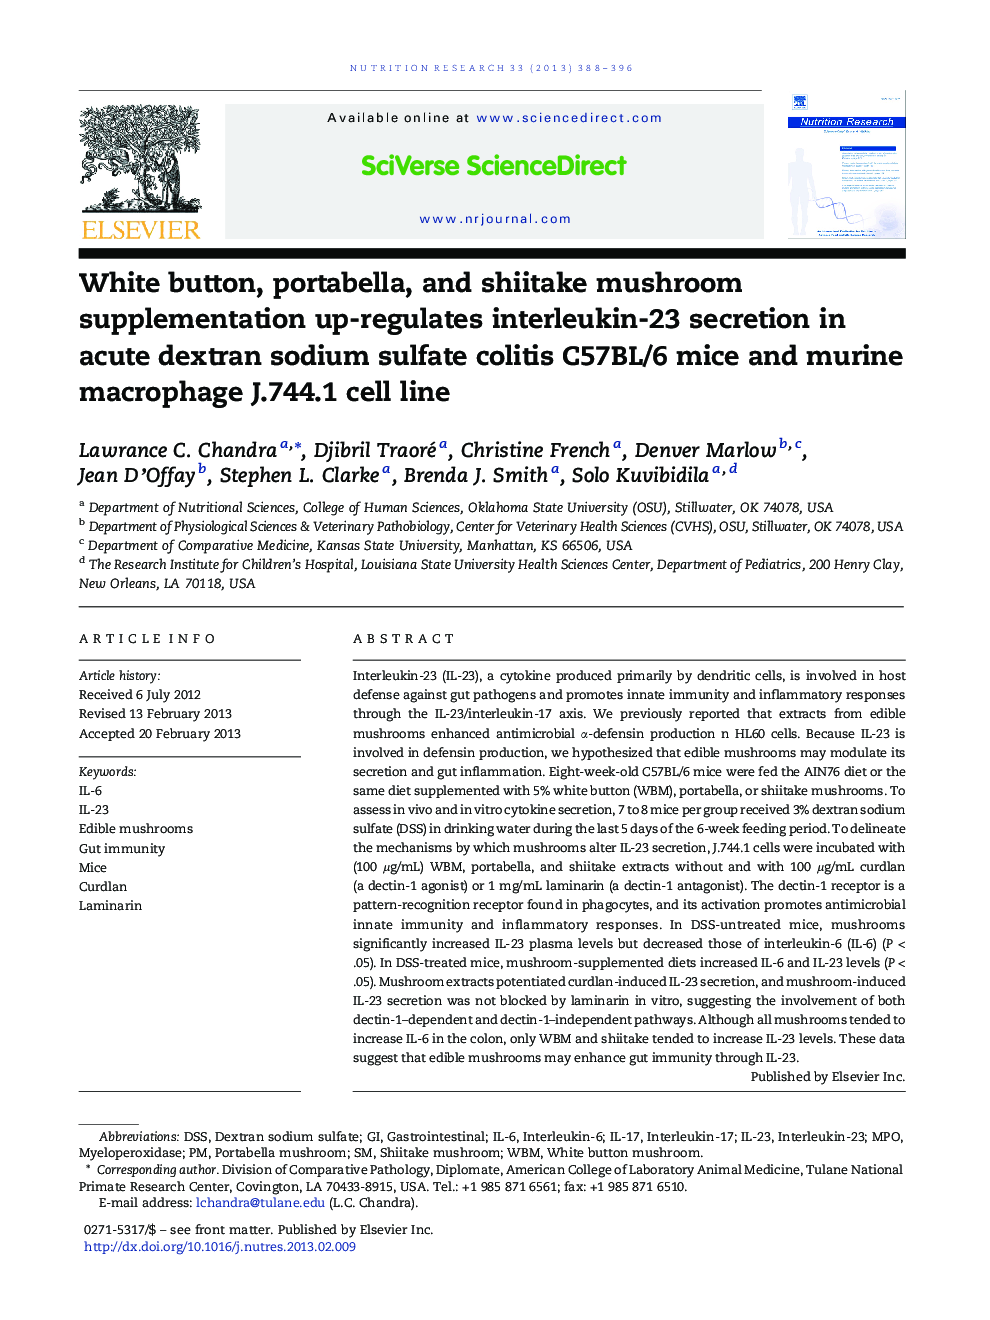 White button, portabella, and shiitake mushroom supplementation up-regulates interleukin-23 secretion in acute dextran sodium sulfate colitis C57BL/6 mice and murine macrophage J.744.1 cell line